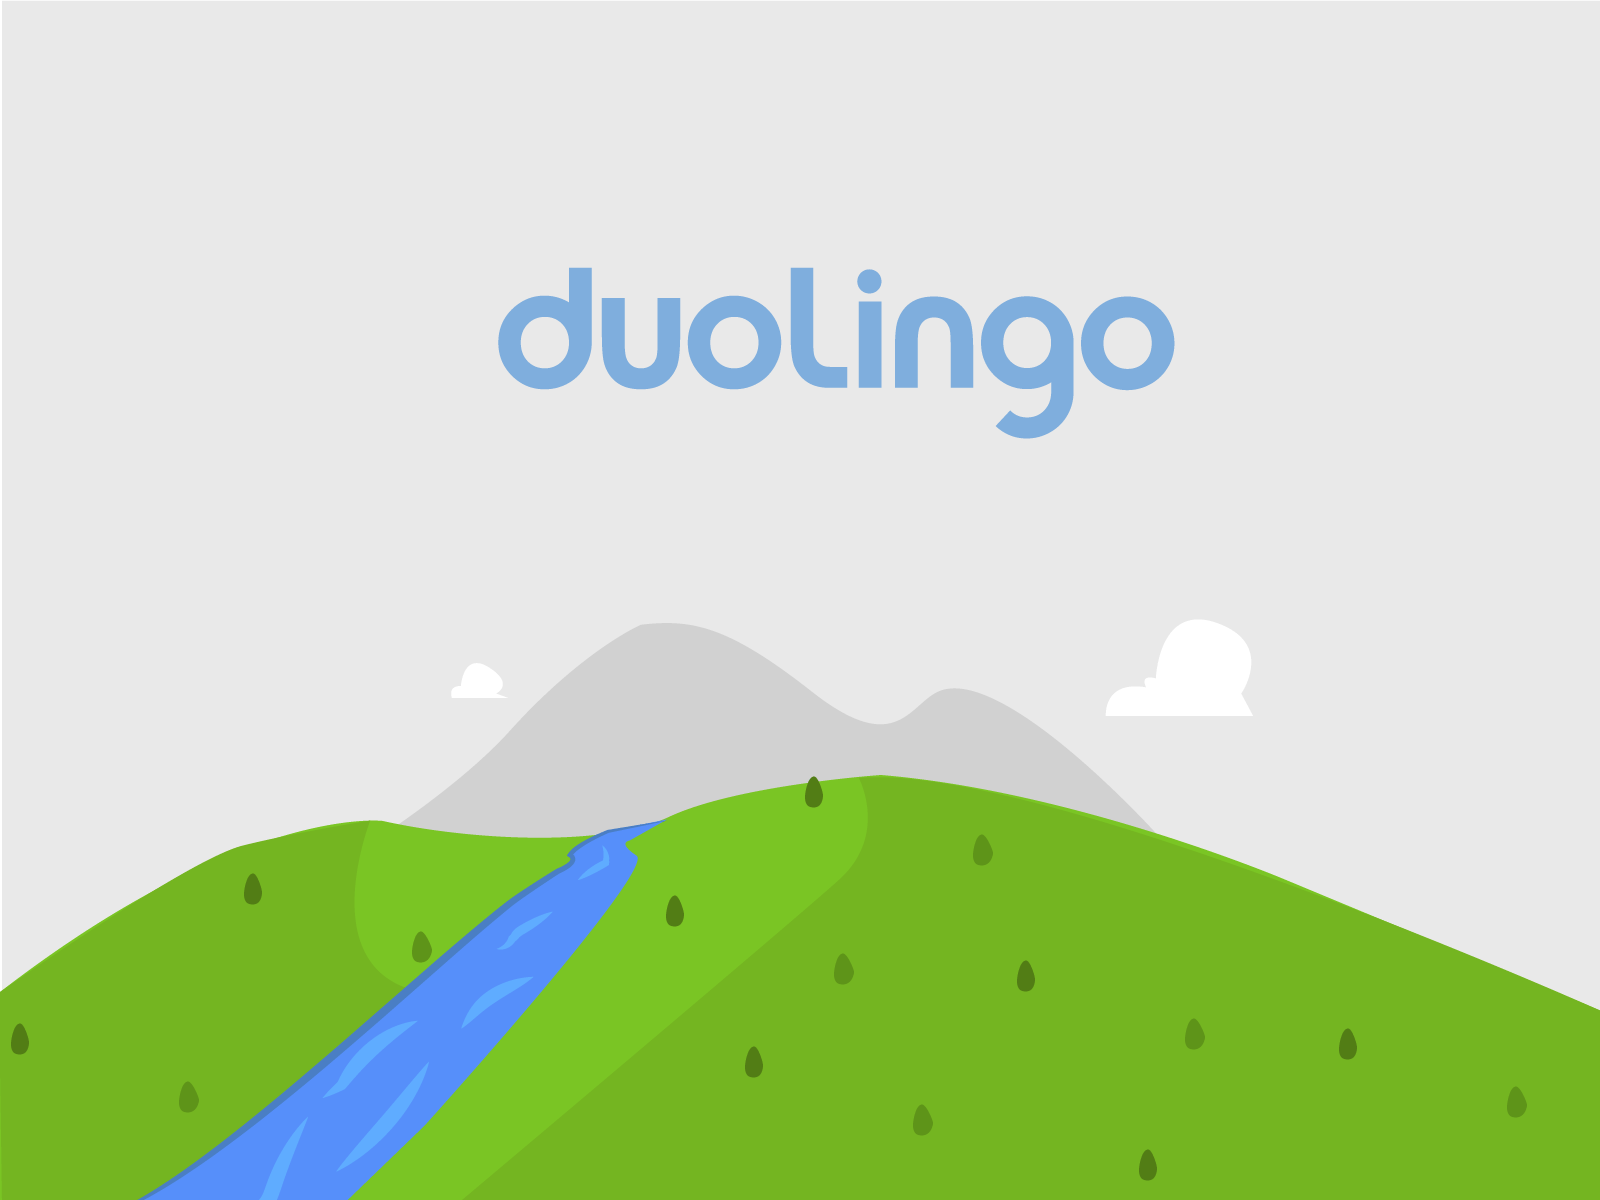 Unofficial) Duolingo Store (Test Run)